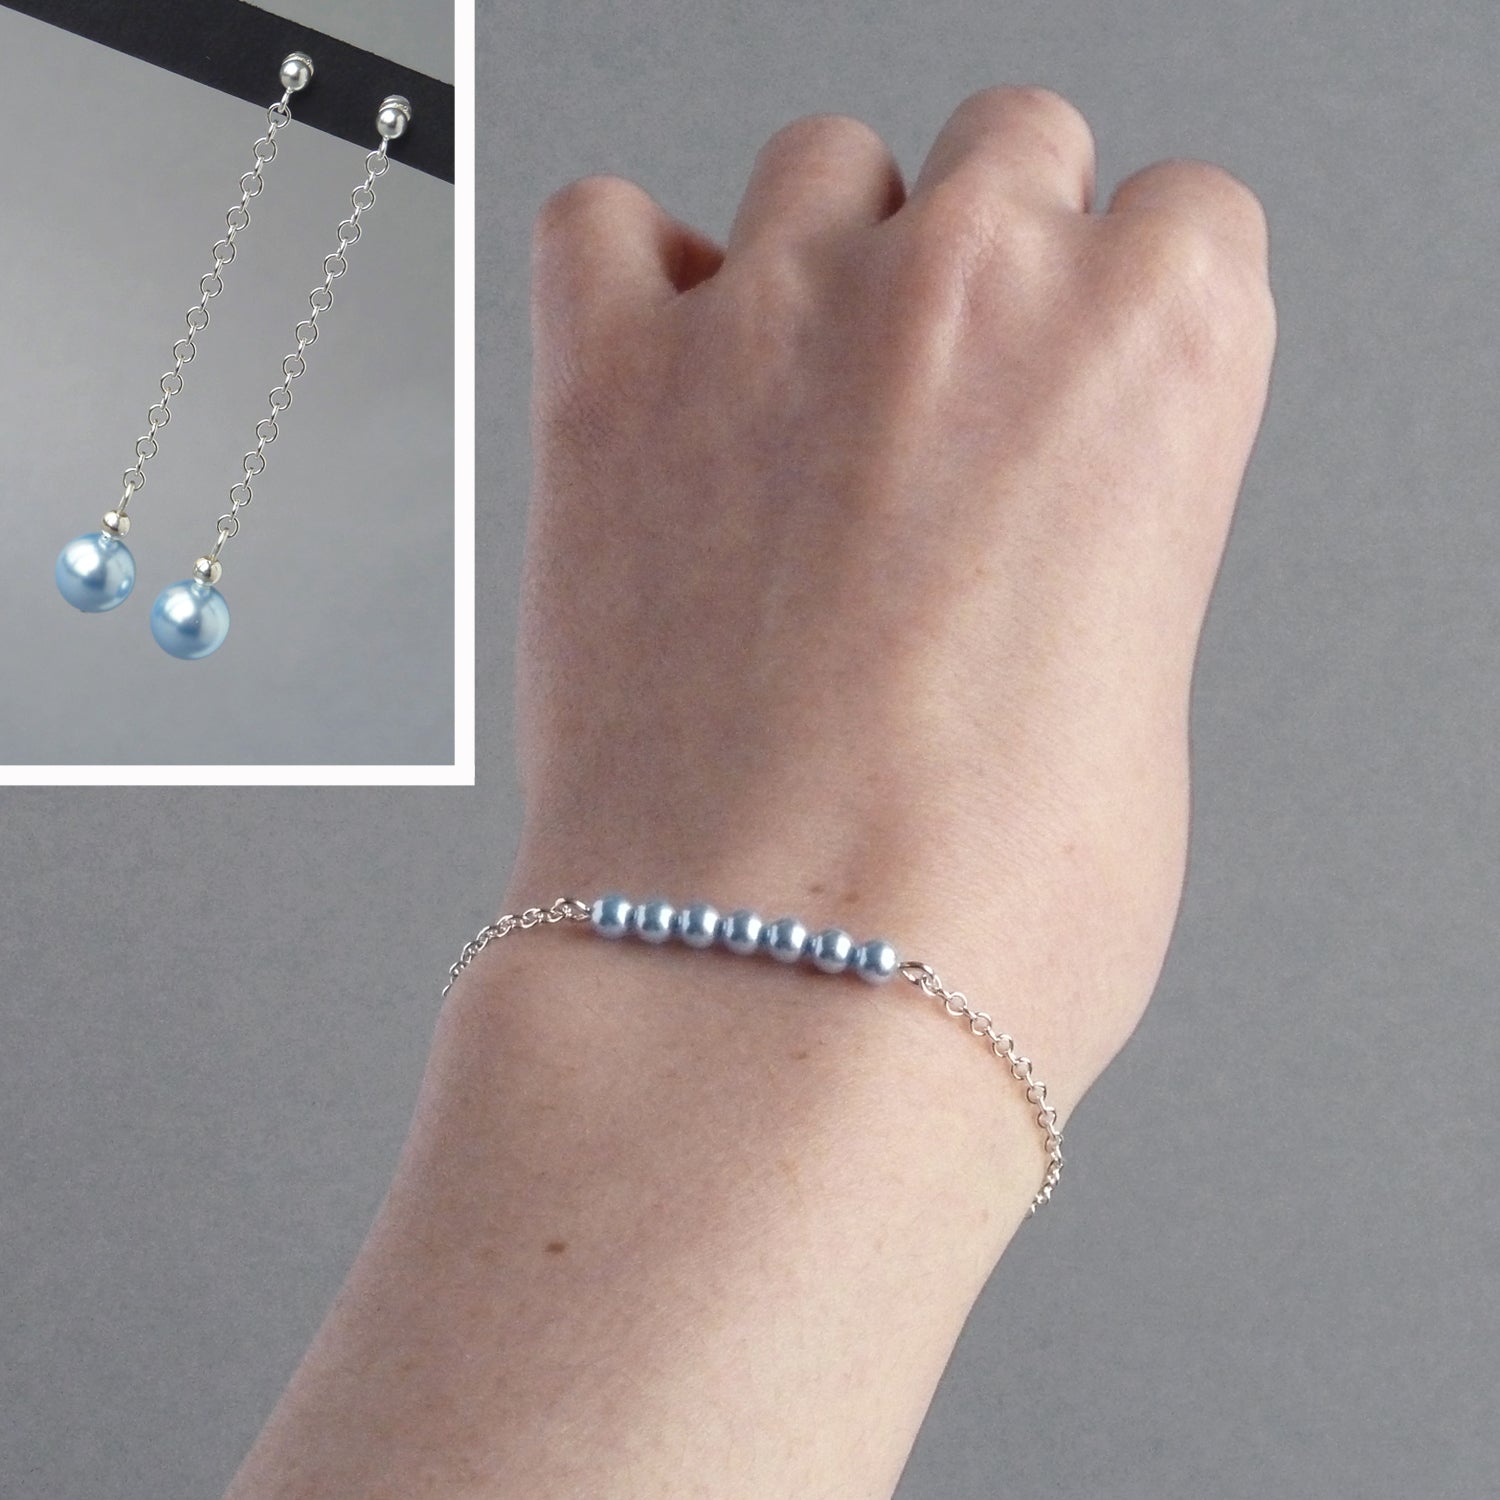 Pale blue pearl bracelet and earrings set